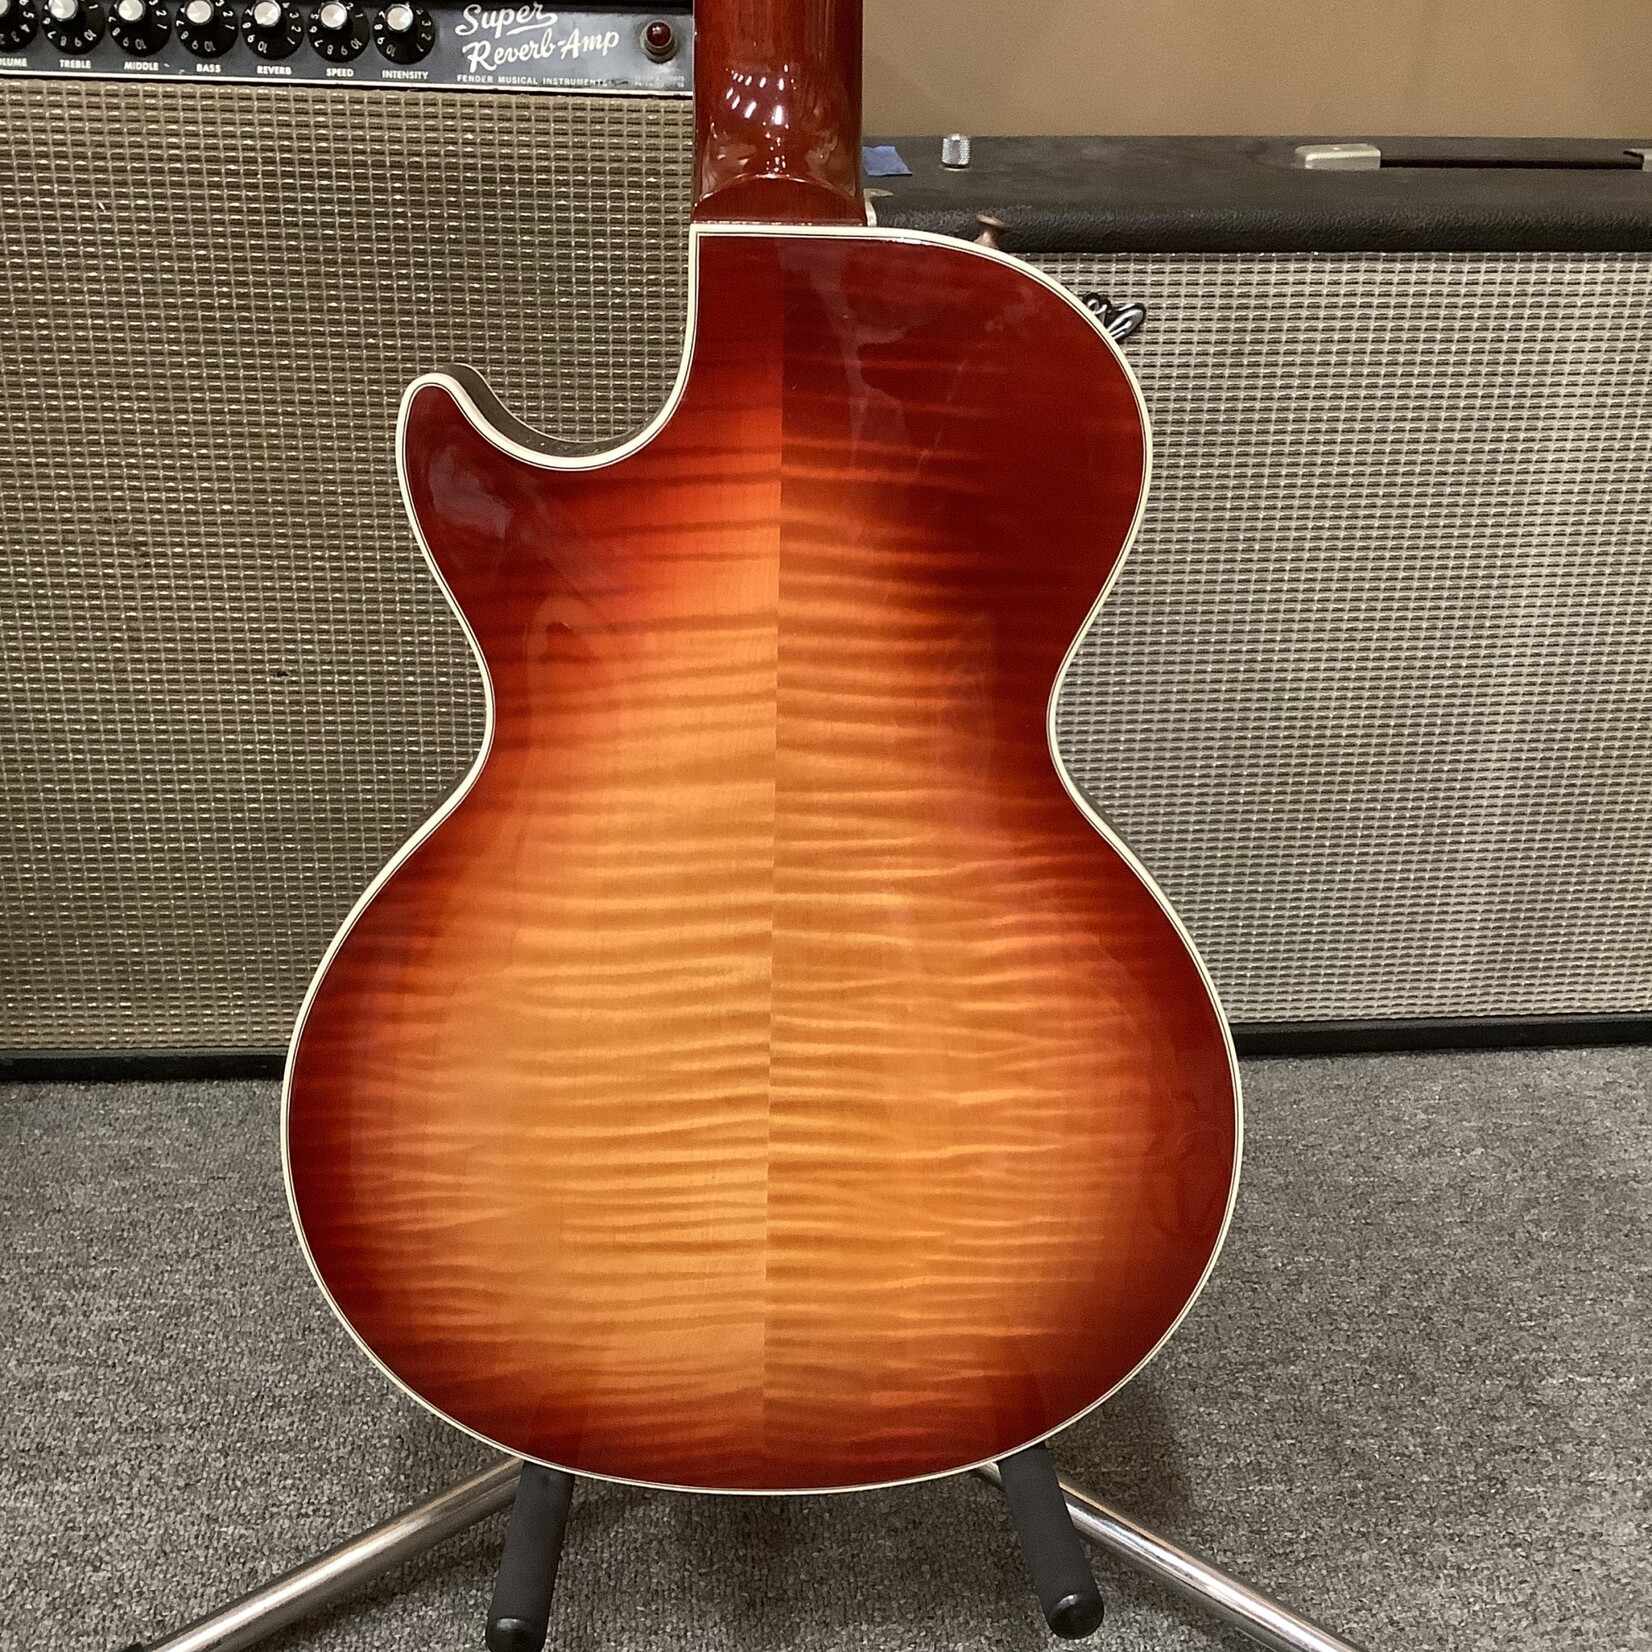 Gibson Used Gibson Les Paul Supreme Flame Sunburst